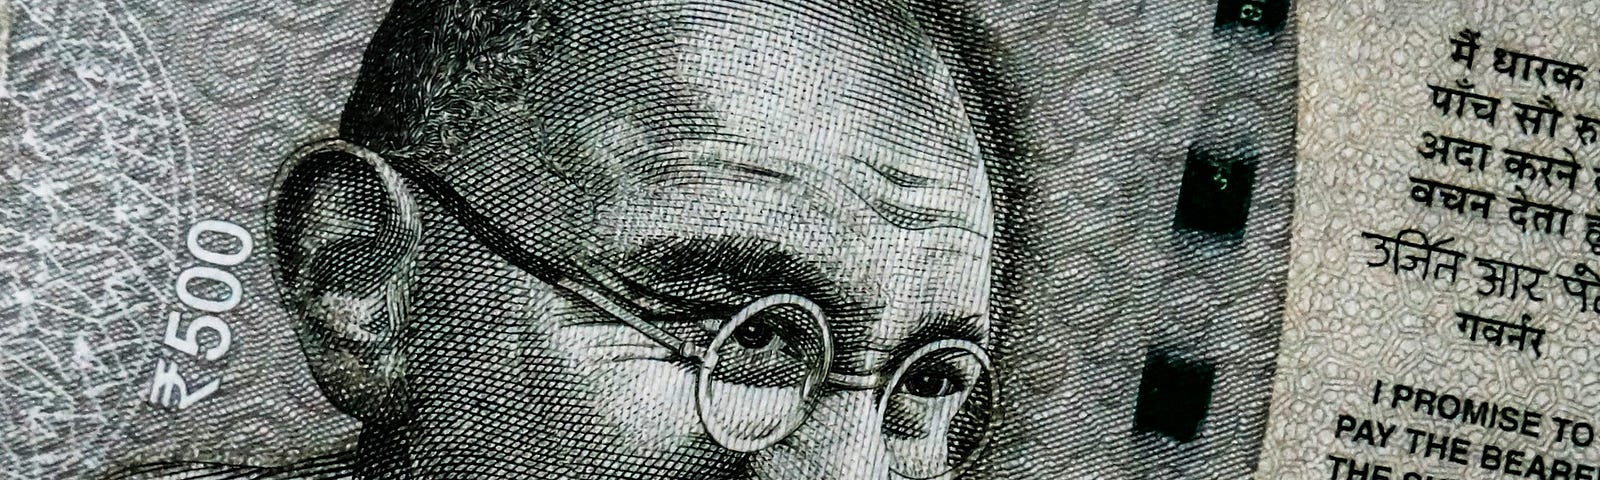 Mahatma Gandhi on Indian currency.